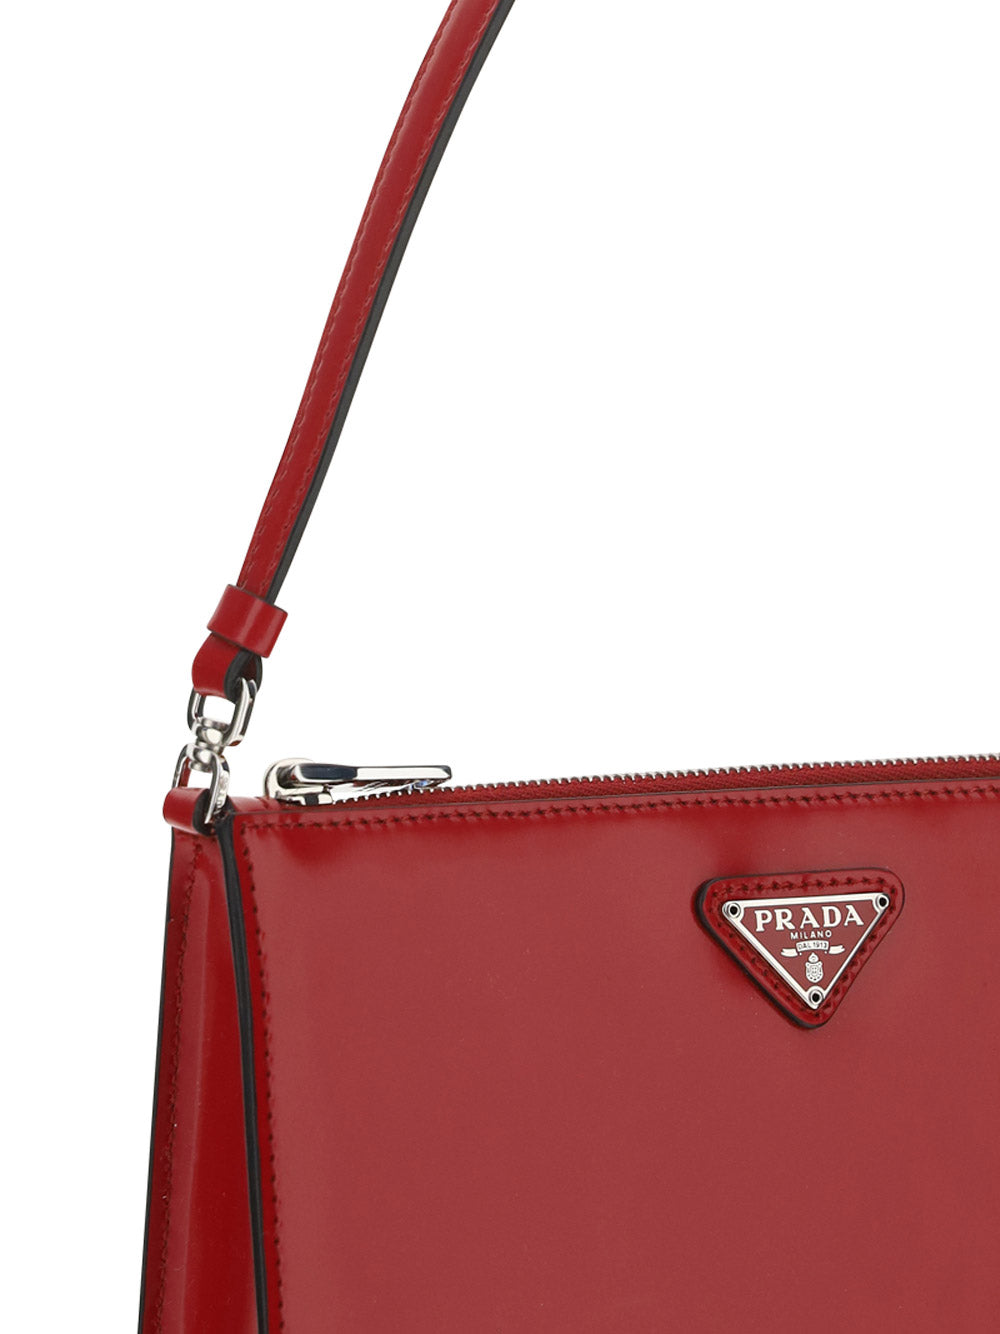 Prada Mini Shoulder Bag In Brushed Leather in Red